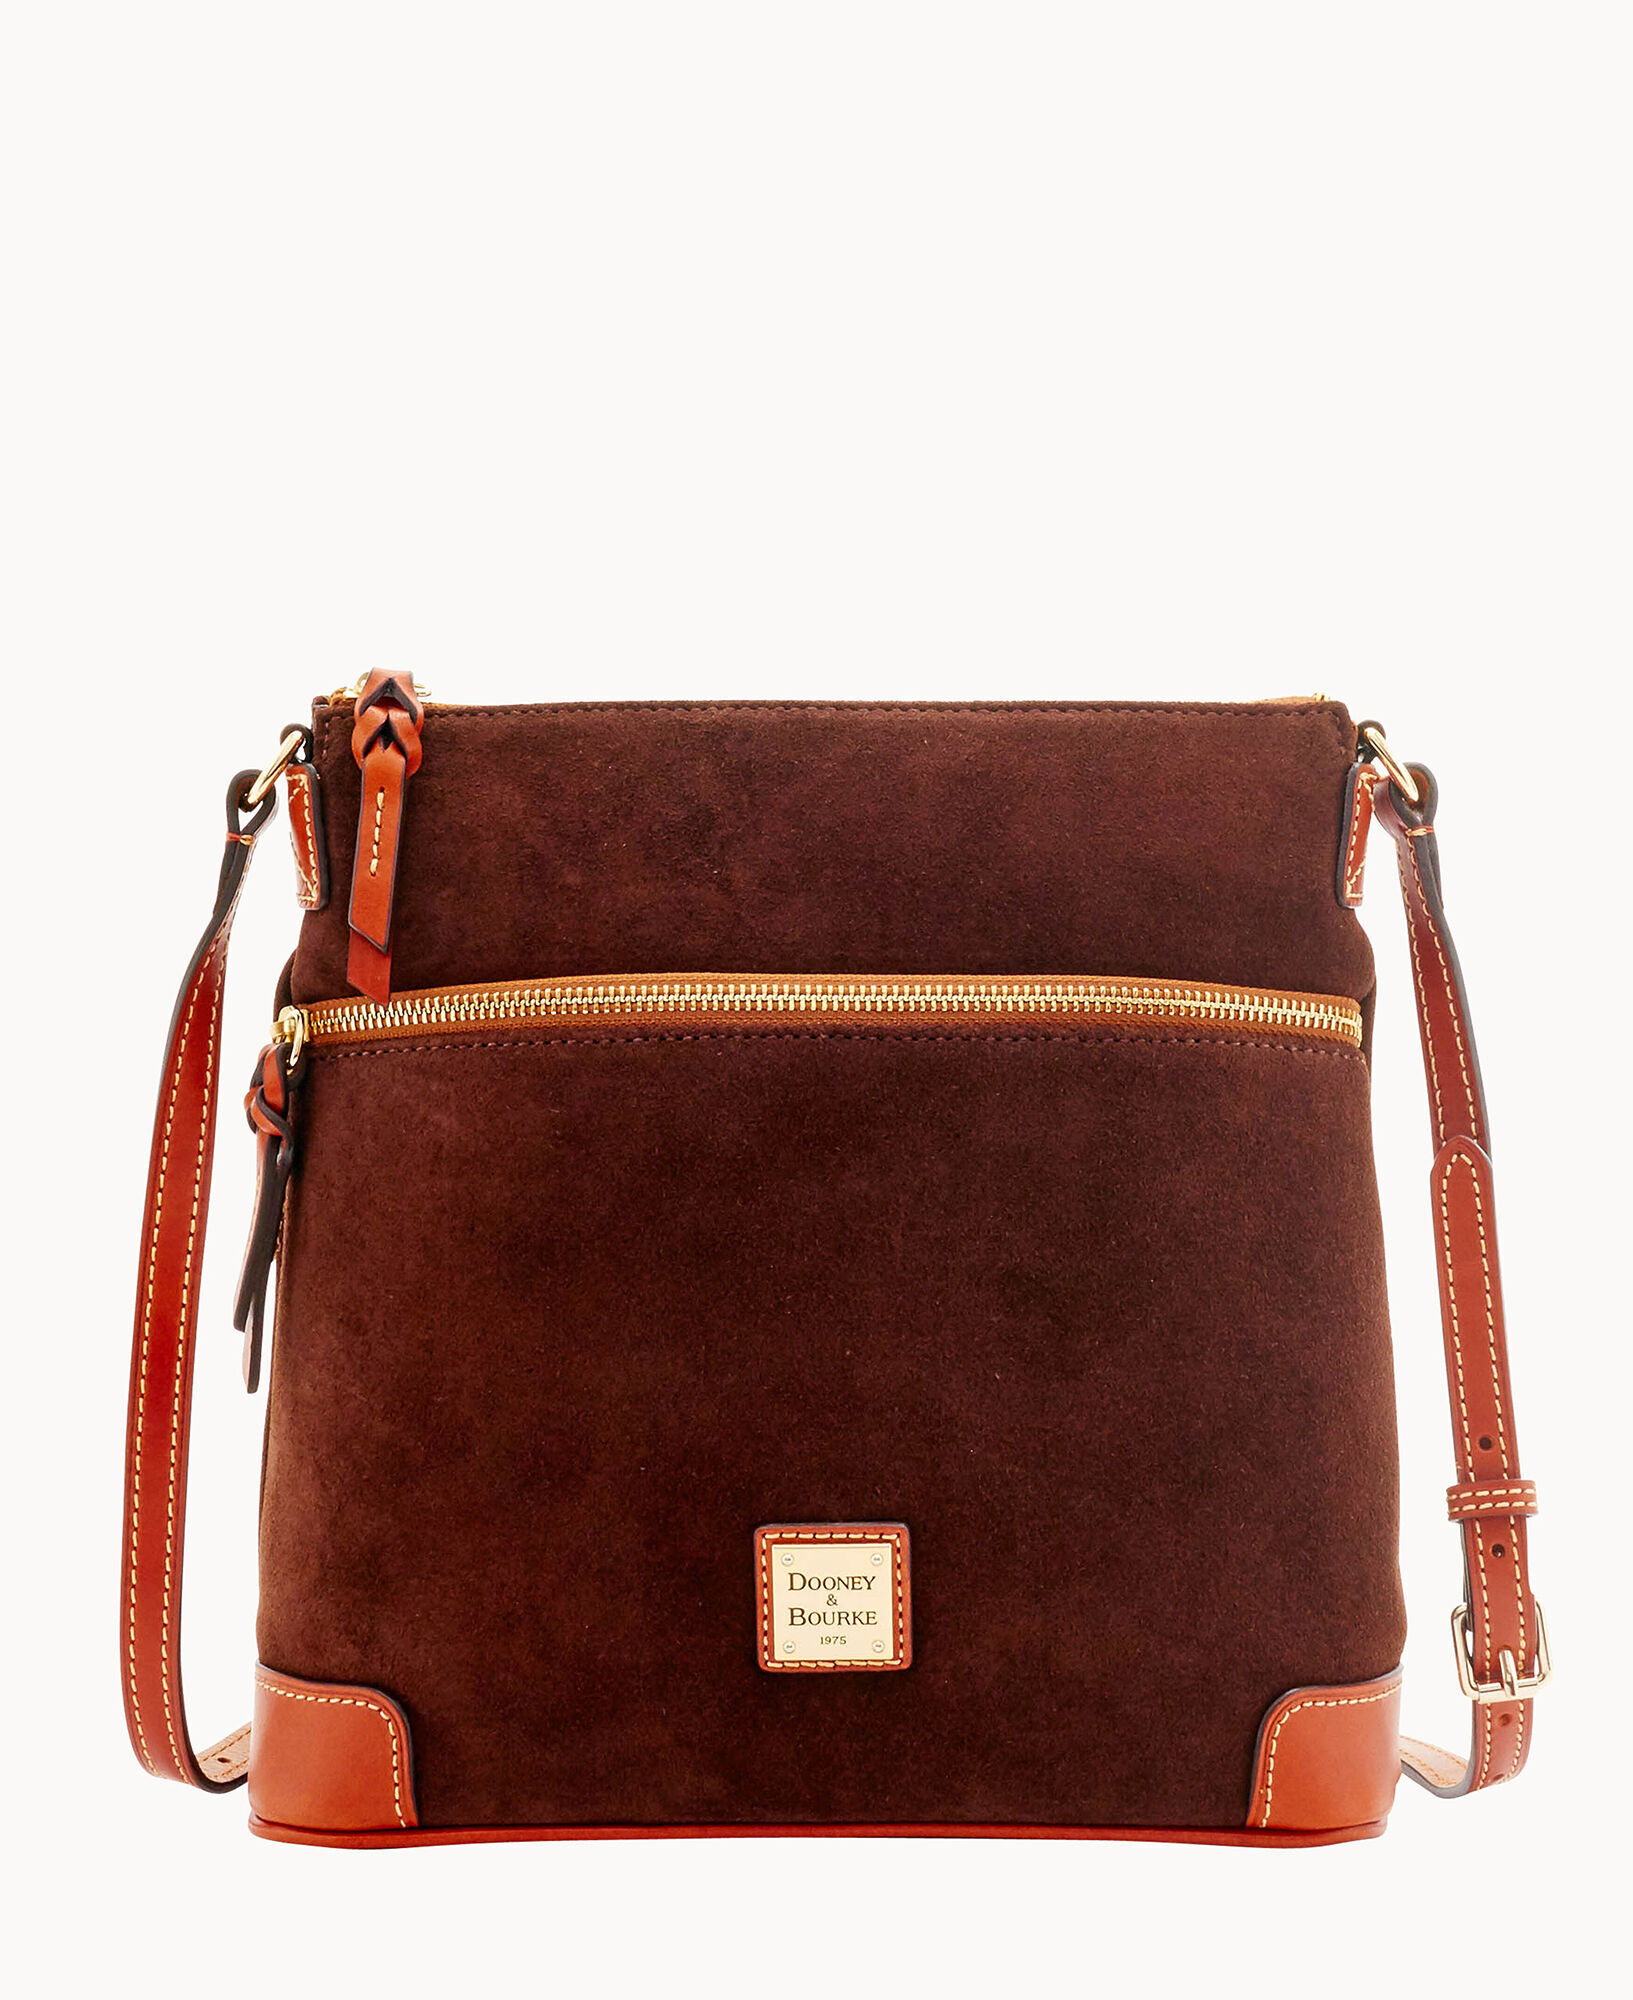 Dooney & Bourke Handbag, Saffiano Lexi Crossbody - Brown Tmoro